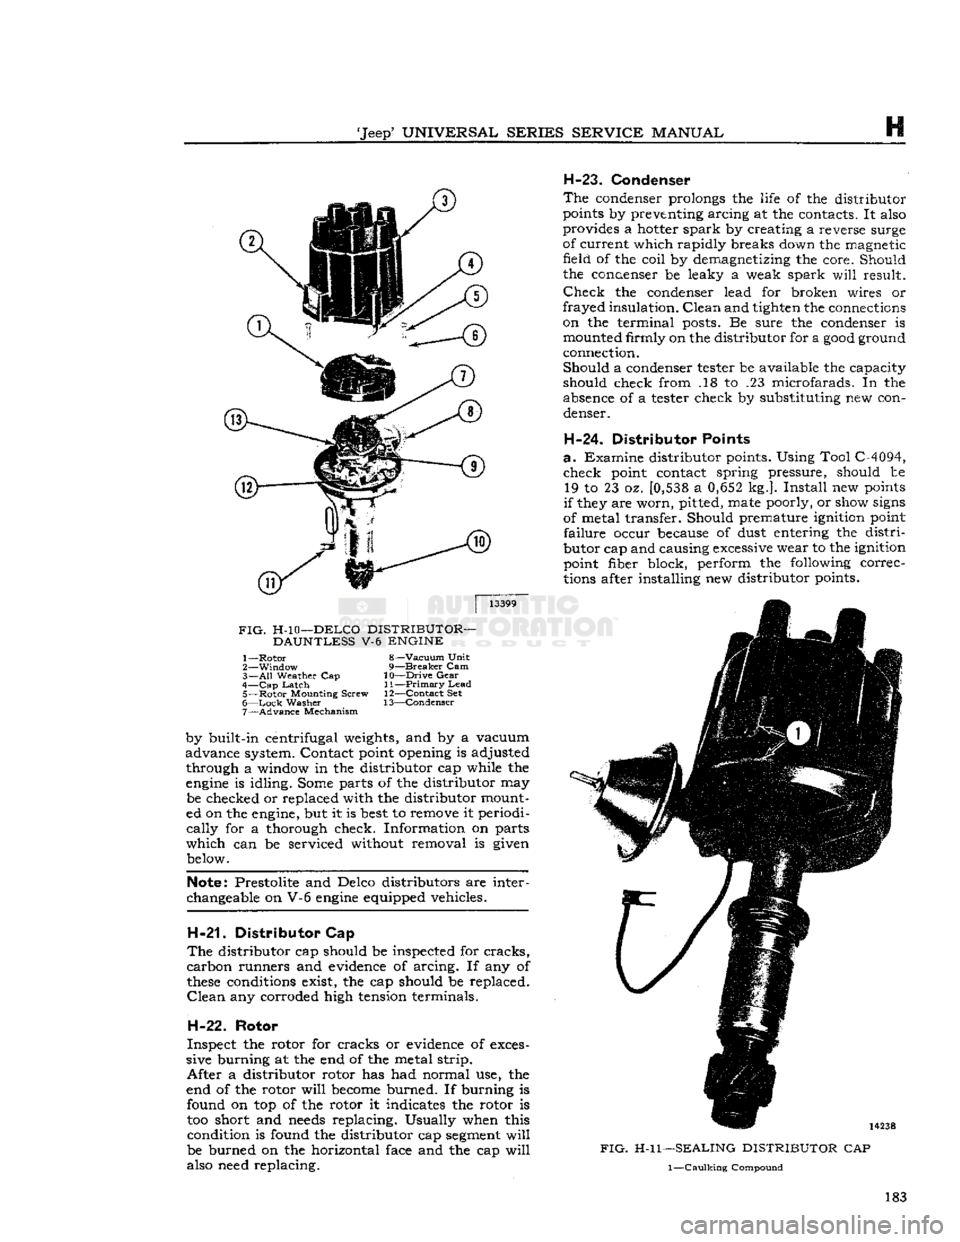 JEEP CJ 1953 Manual PDF 
Jeep*
 UNIVERSAL
 SERIES SERVICE
 MANUAL 

H 
|
 13399 

FIG.
 H-10—DELCO
 DISTRIBUTOR— 
 DAUNTLESS
 V-6
 ENGINE 

1—
 Rotor
 8—Vacuum
 Unit 

2—
 Window
 9—Breaker Cam 
3—
 All
 Weath